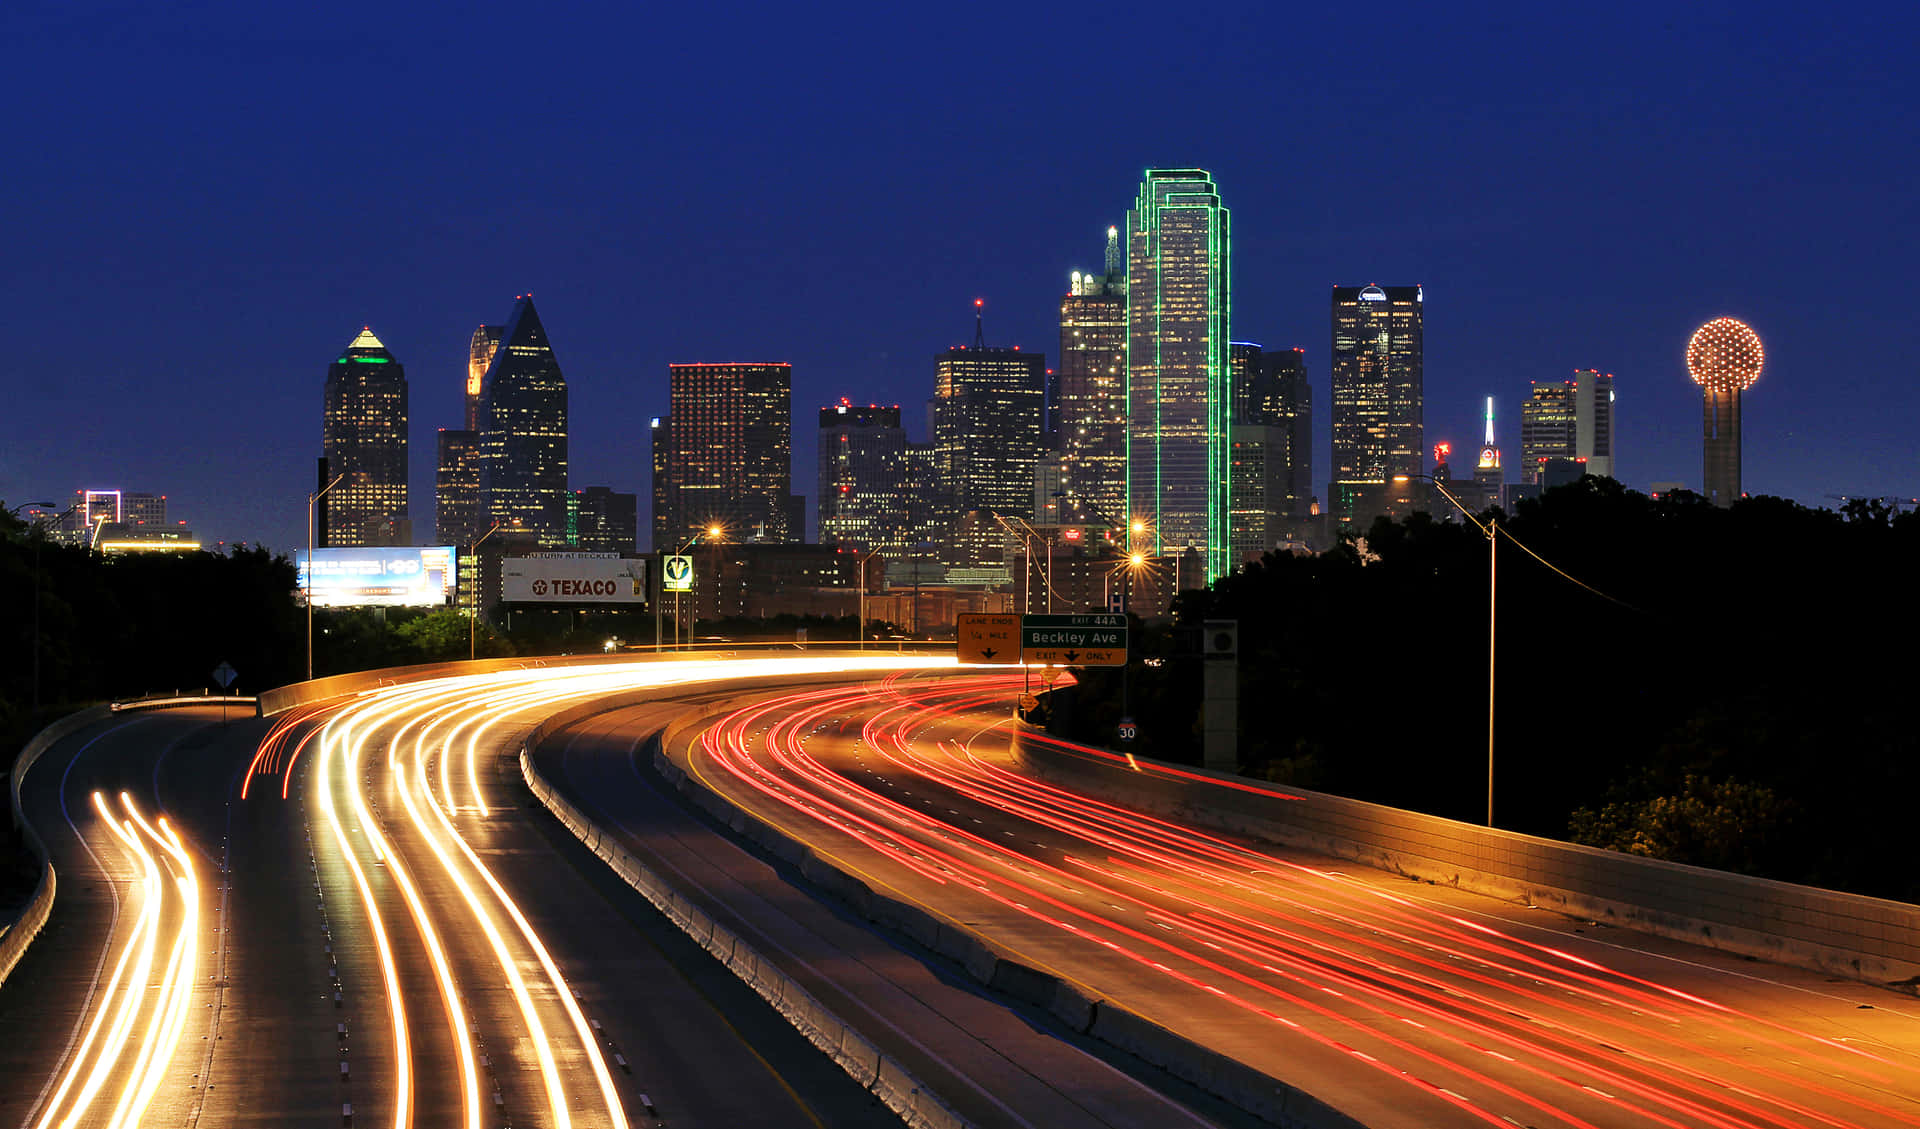 The Dallas Skyline Is An Impressive Sight.